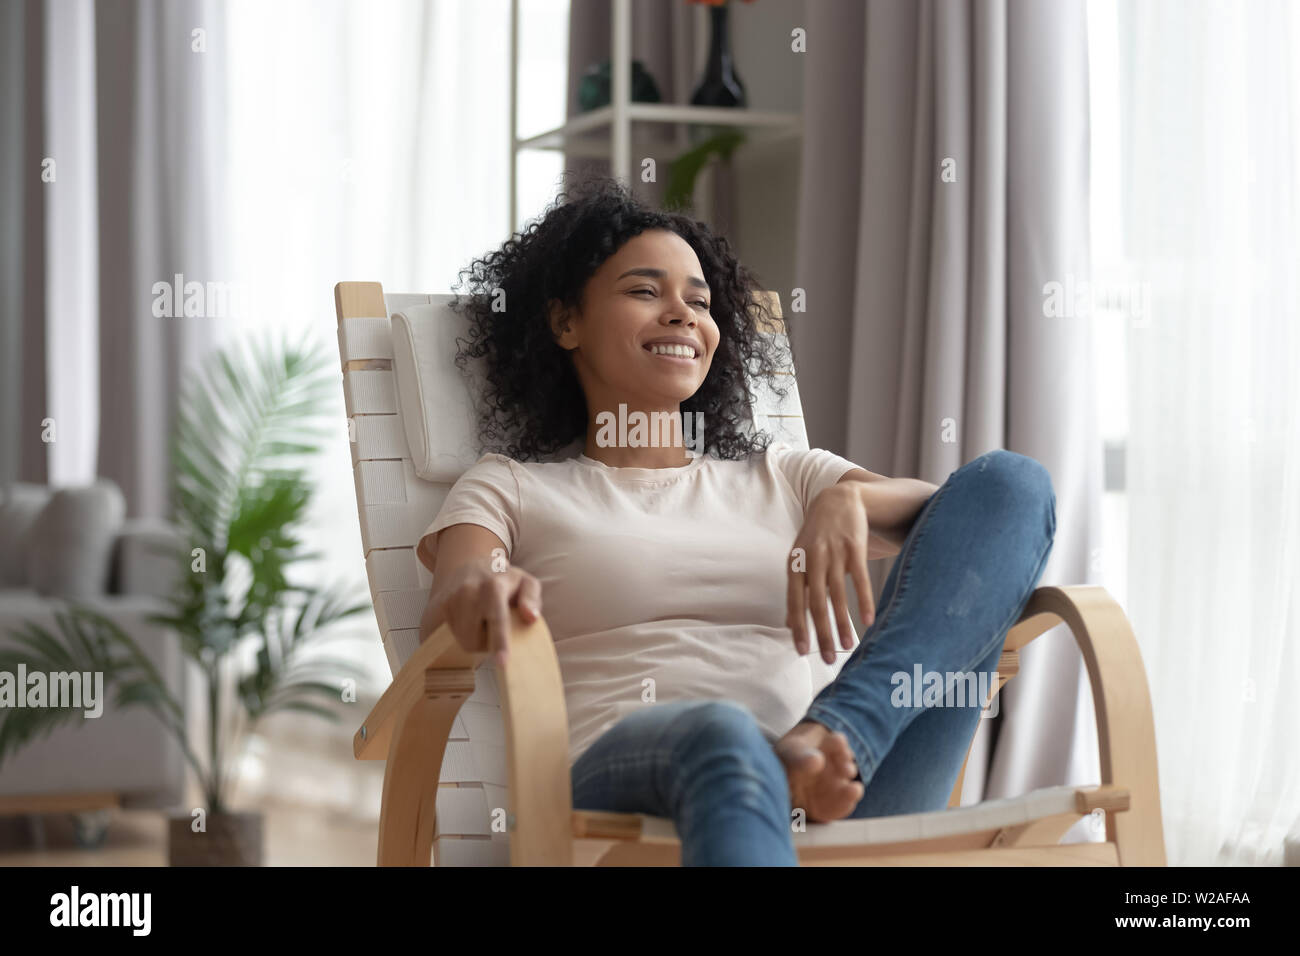 Lächelnd ruhige schwarze Frau entspannen in komfortable Holz Schaukelstuhl Stockfoto